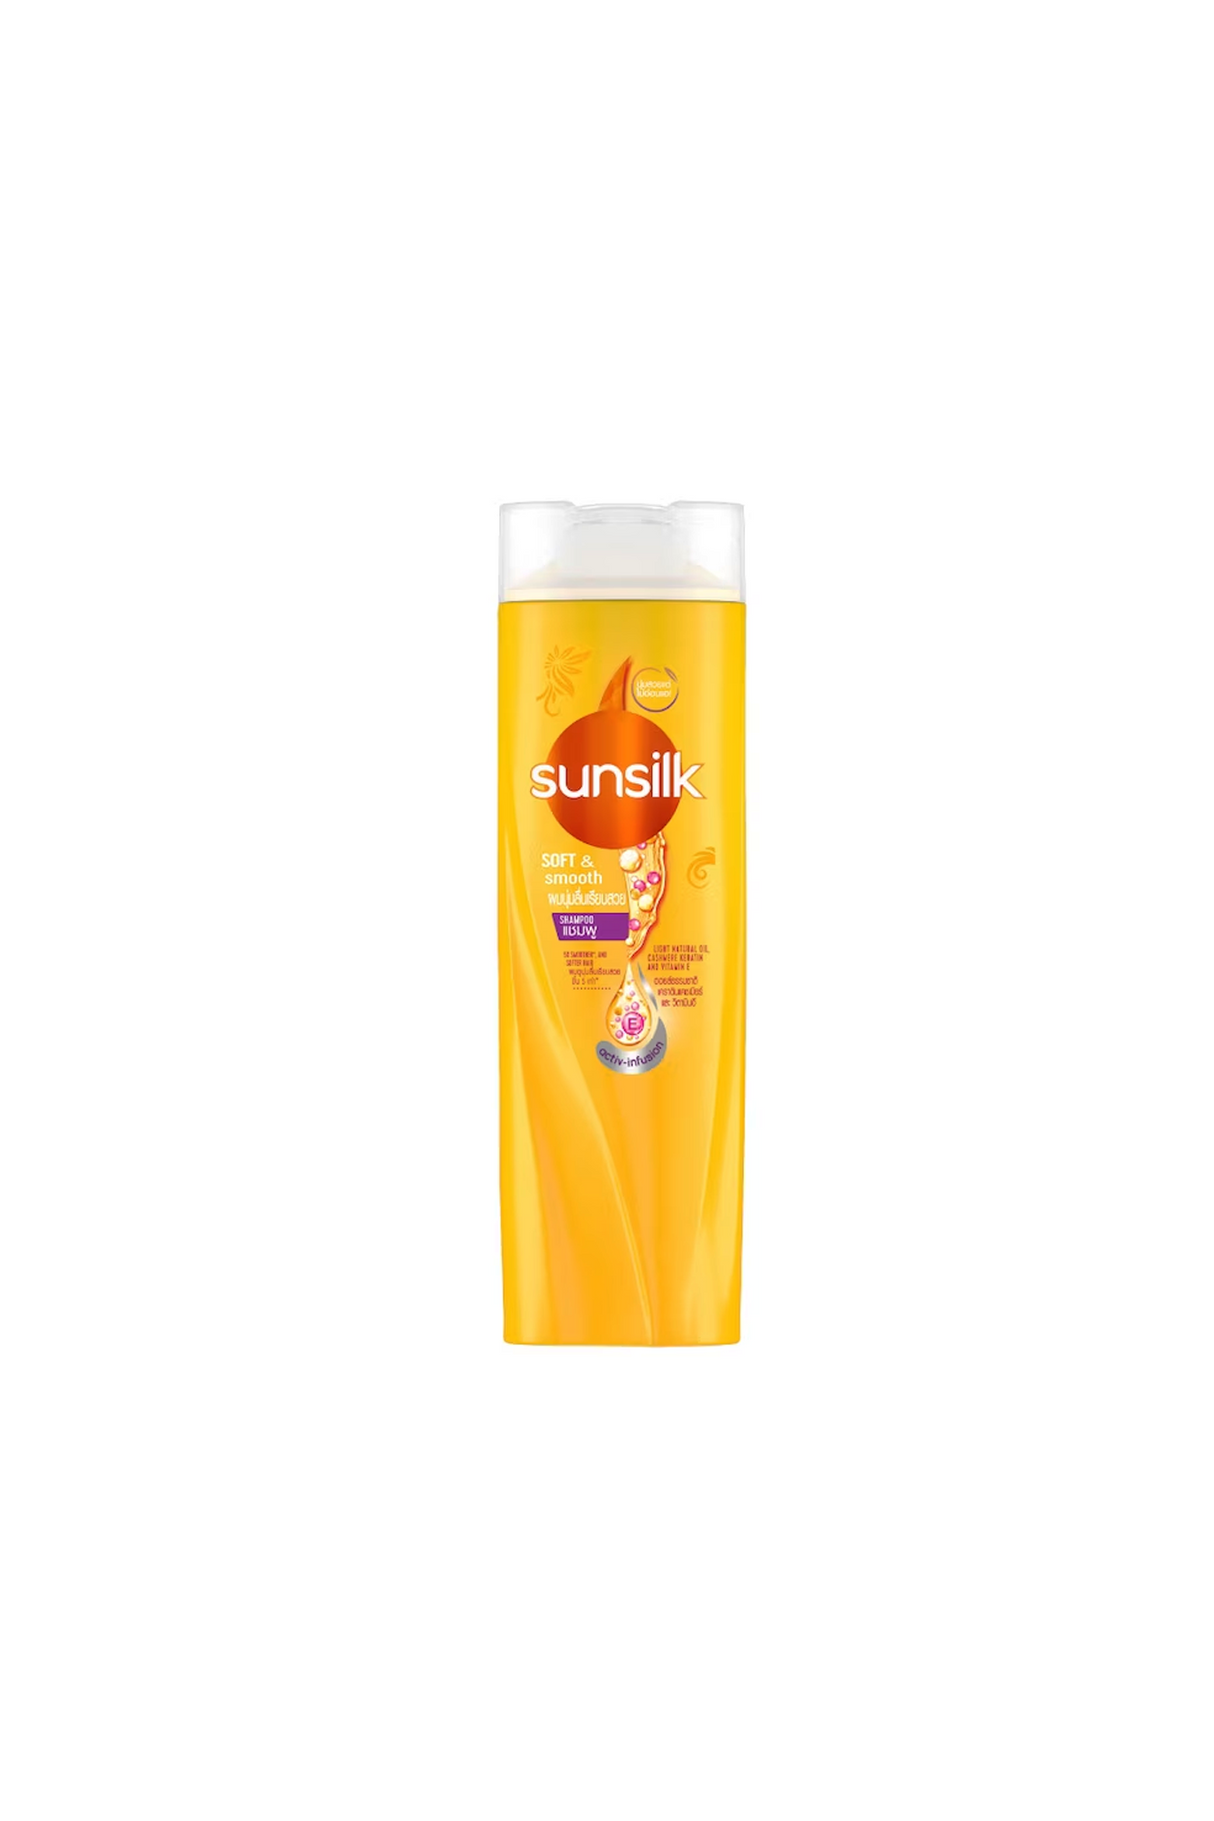 sunsilk shampoo soft&smooth 300ml